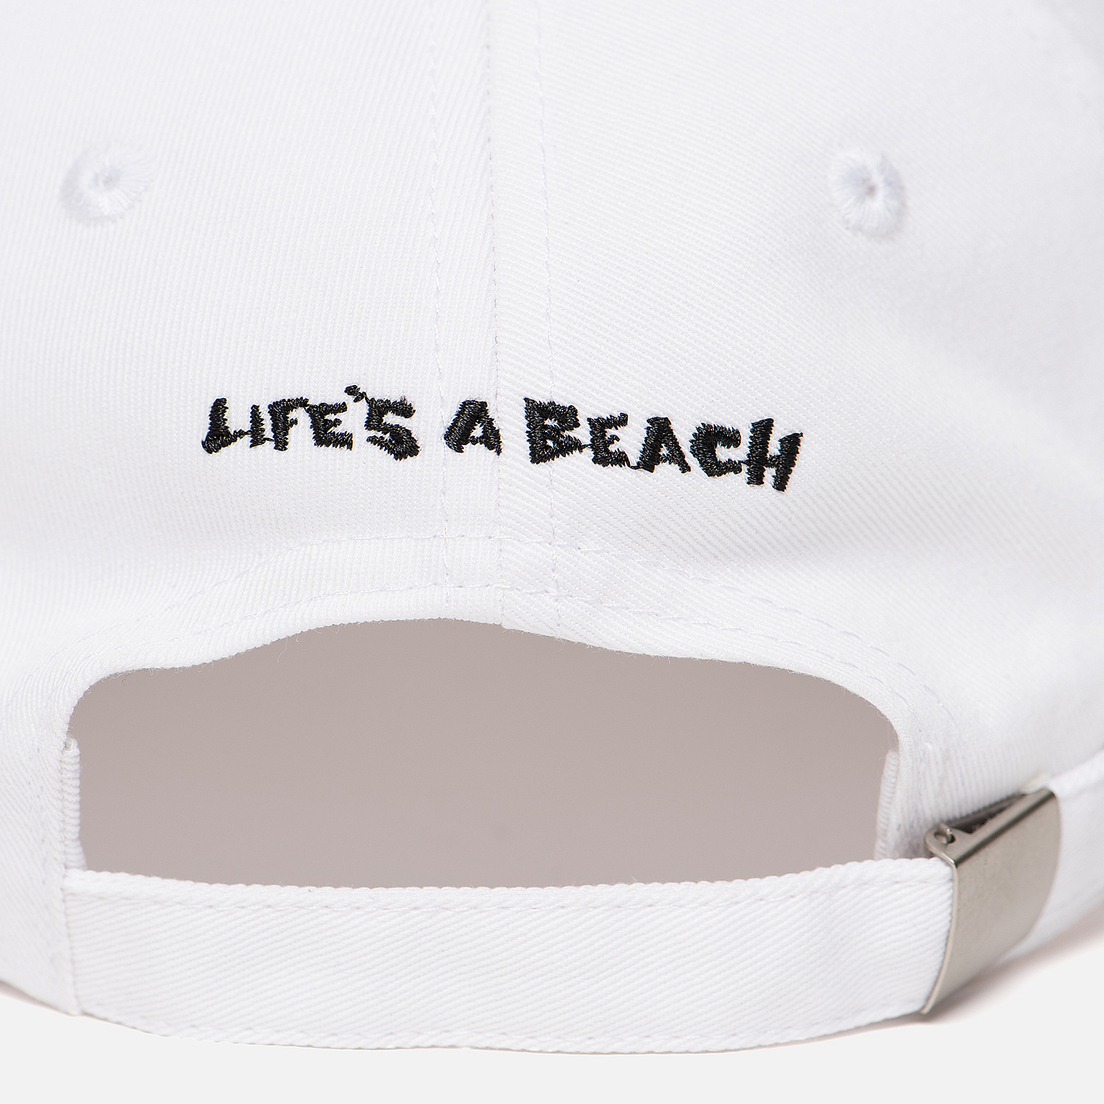 Life's a Beach Кепка Logo